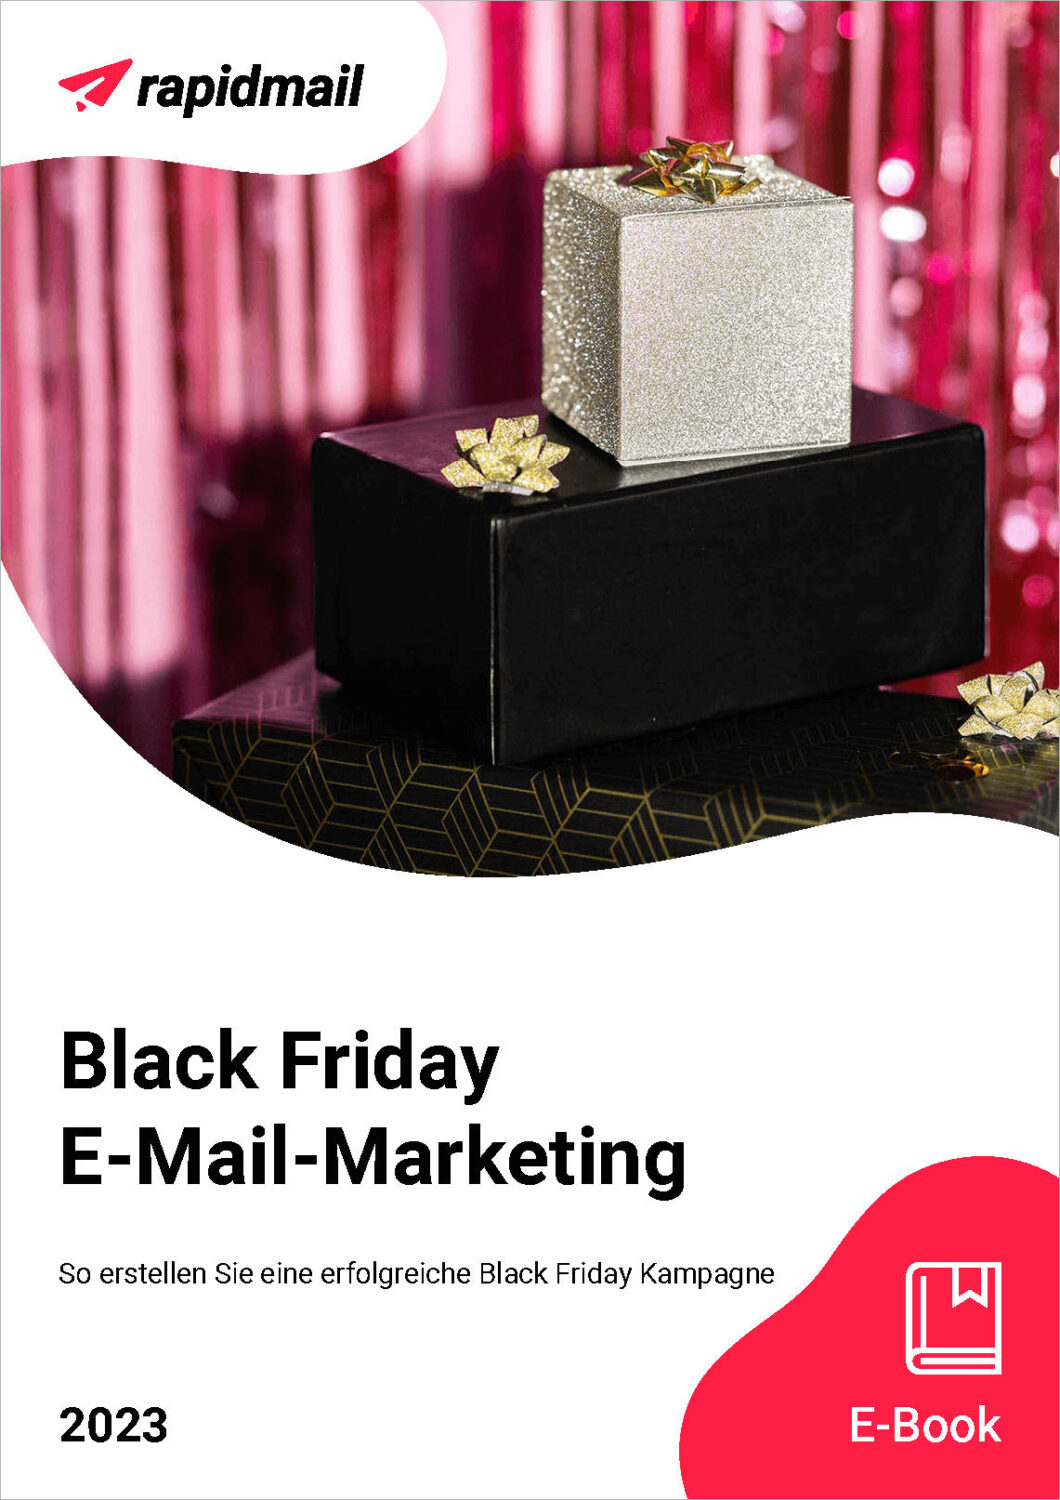 Coverseite des rapidmail E-Books zum Thema Black Friday E-Mail-Marketing